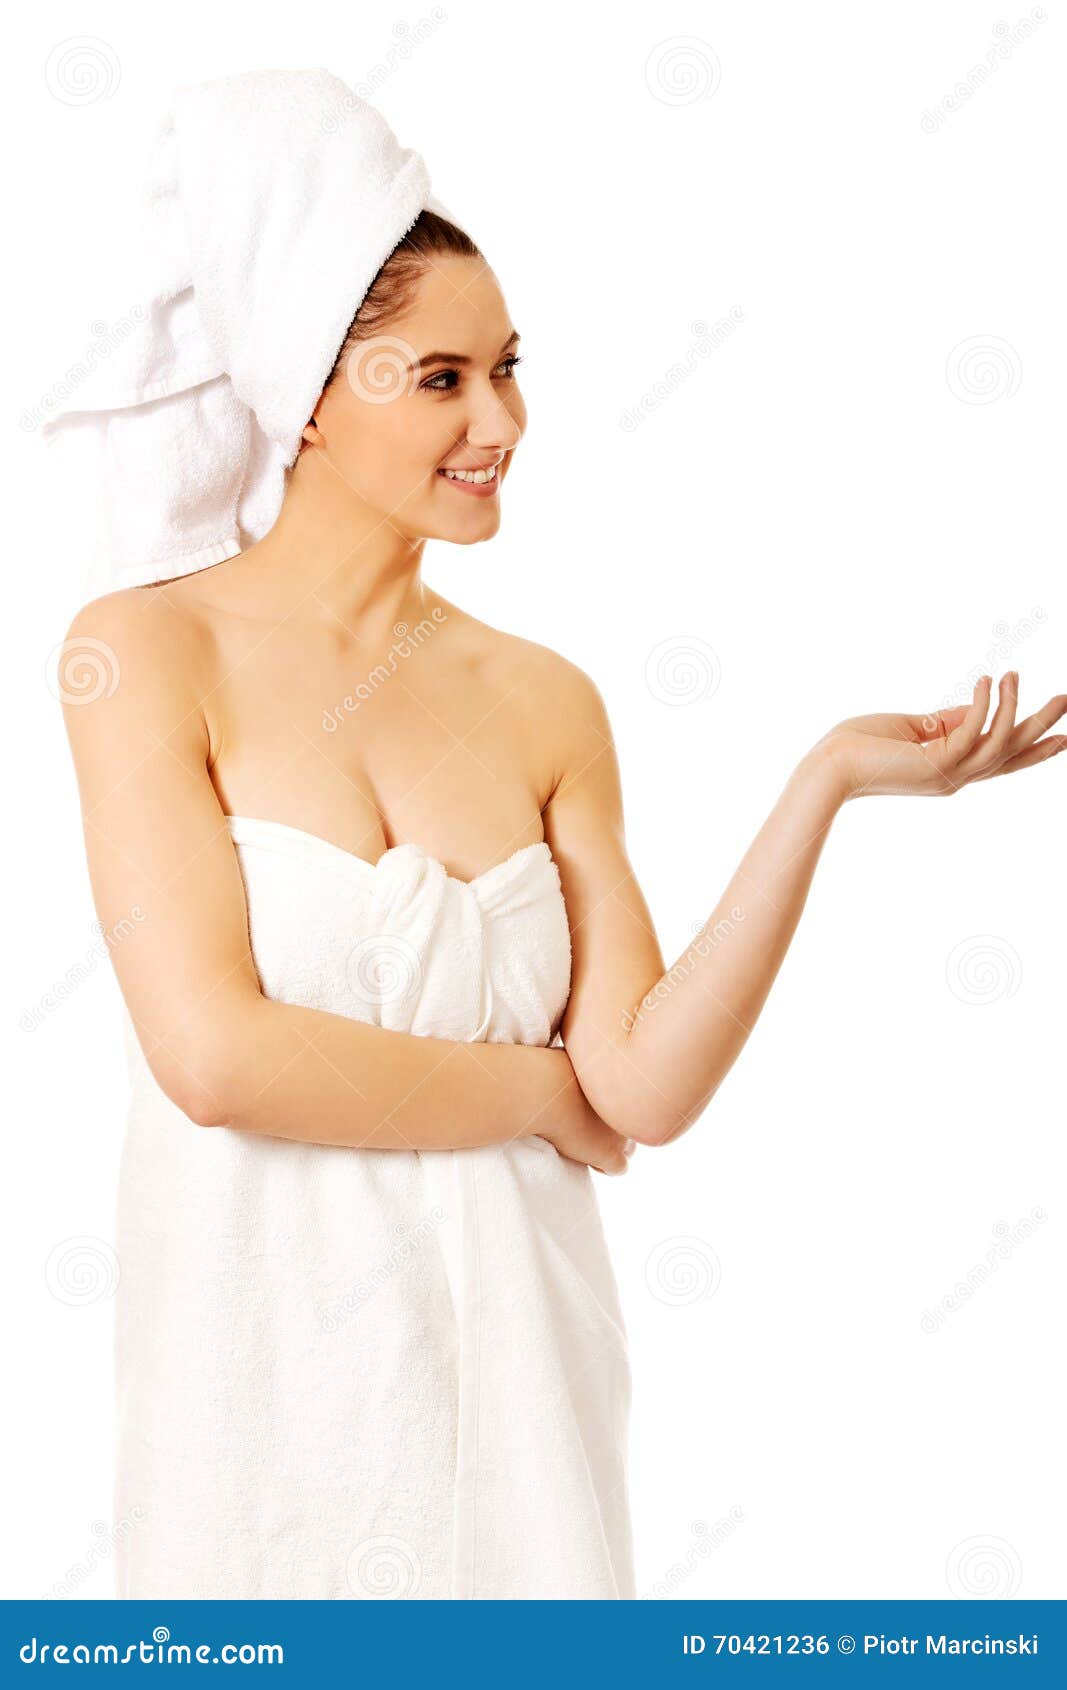 Обернутая полотенцем. Девушка в полотенце. Девушка завернутая в полотенце. Девушка замотанная в полотенце. Девушка с полотенцем в руках.